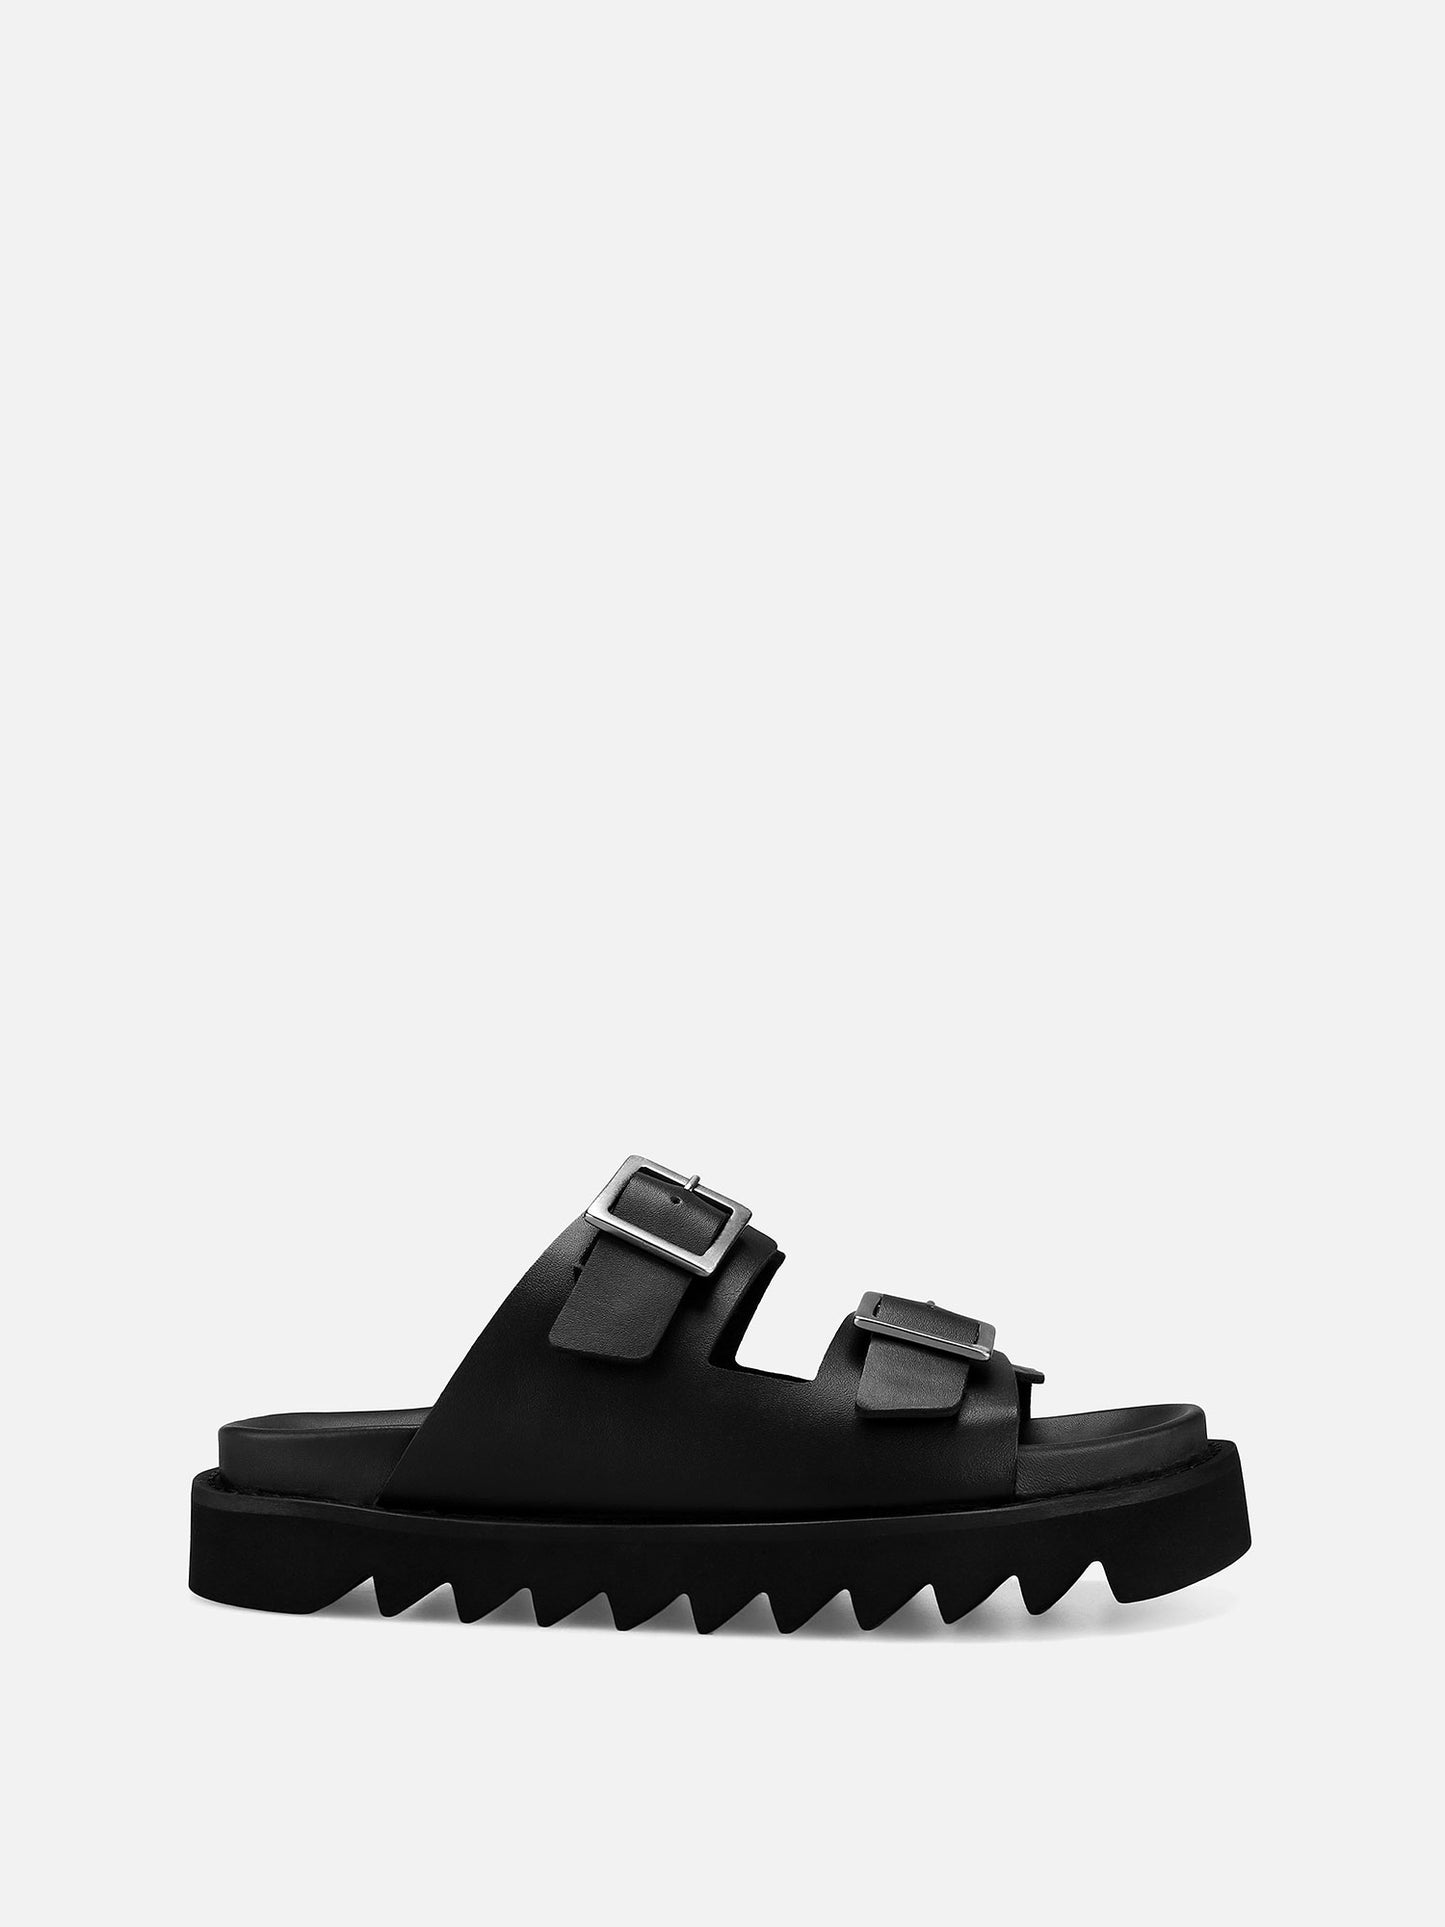 NAXOS Buckled Sandals - Black